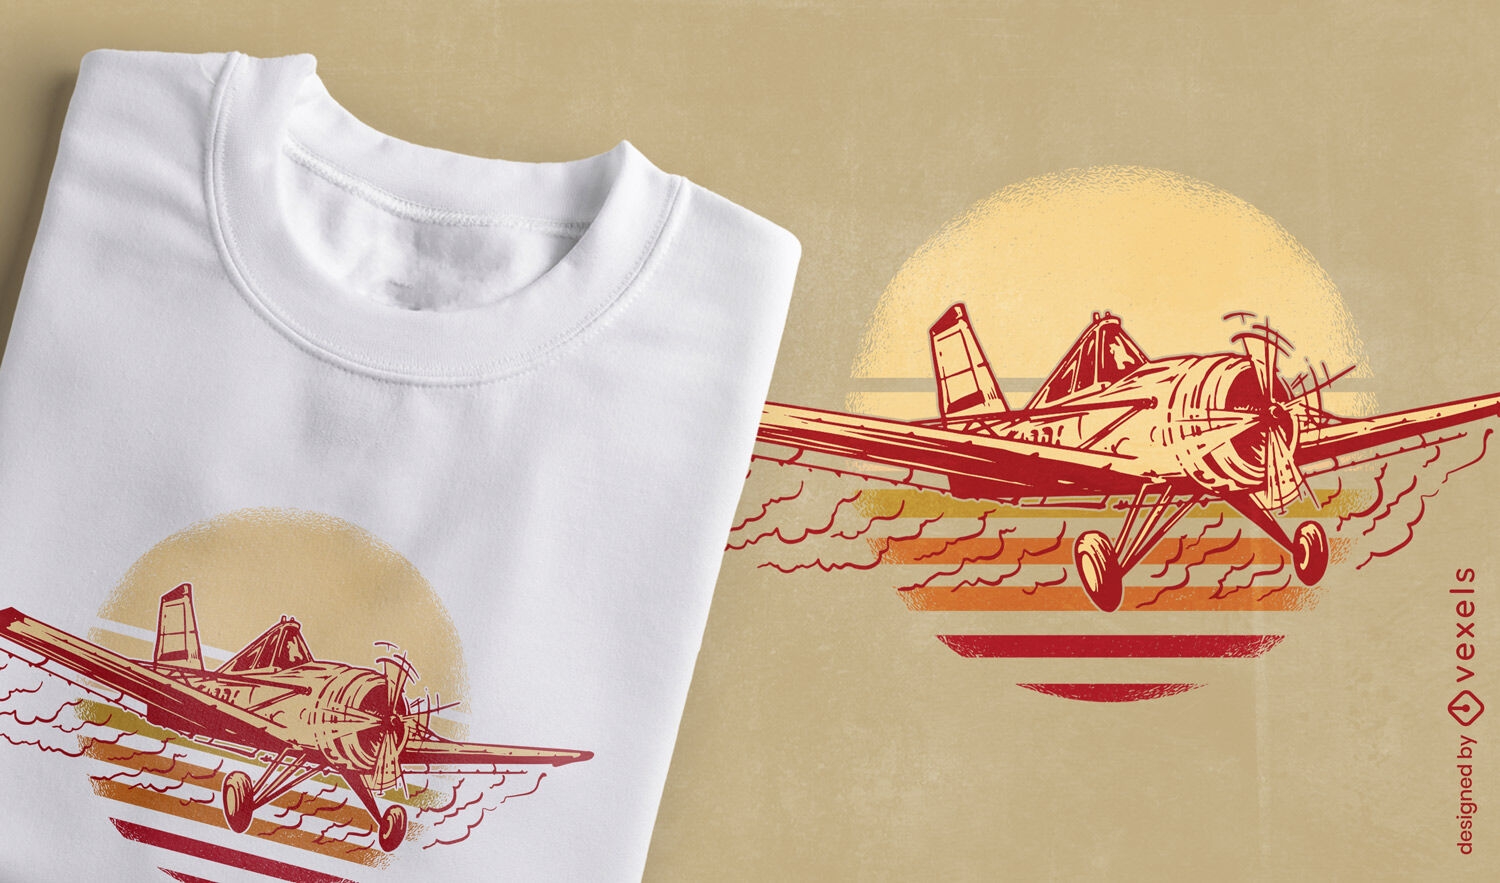 Small plane and retro sunset t-shirt design